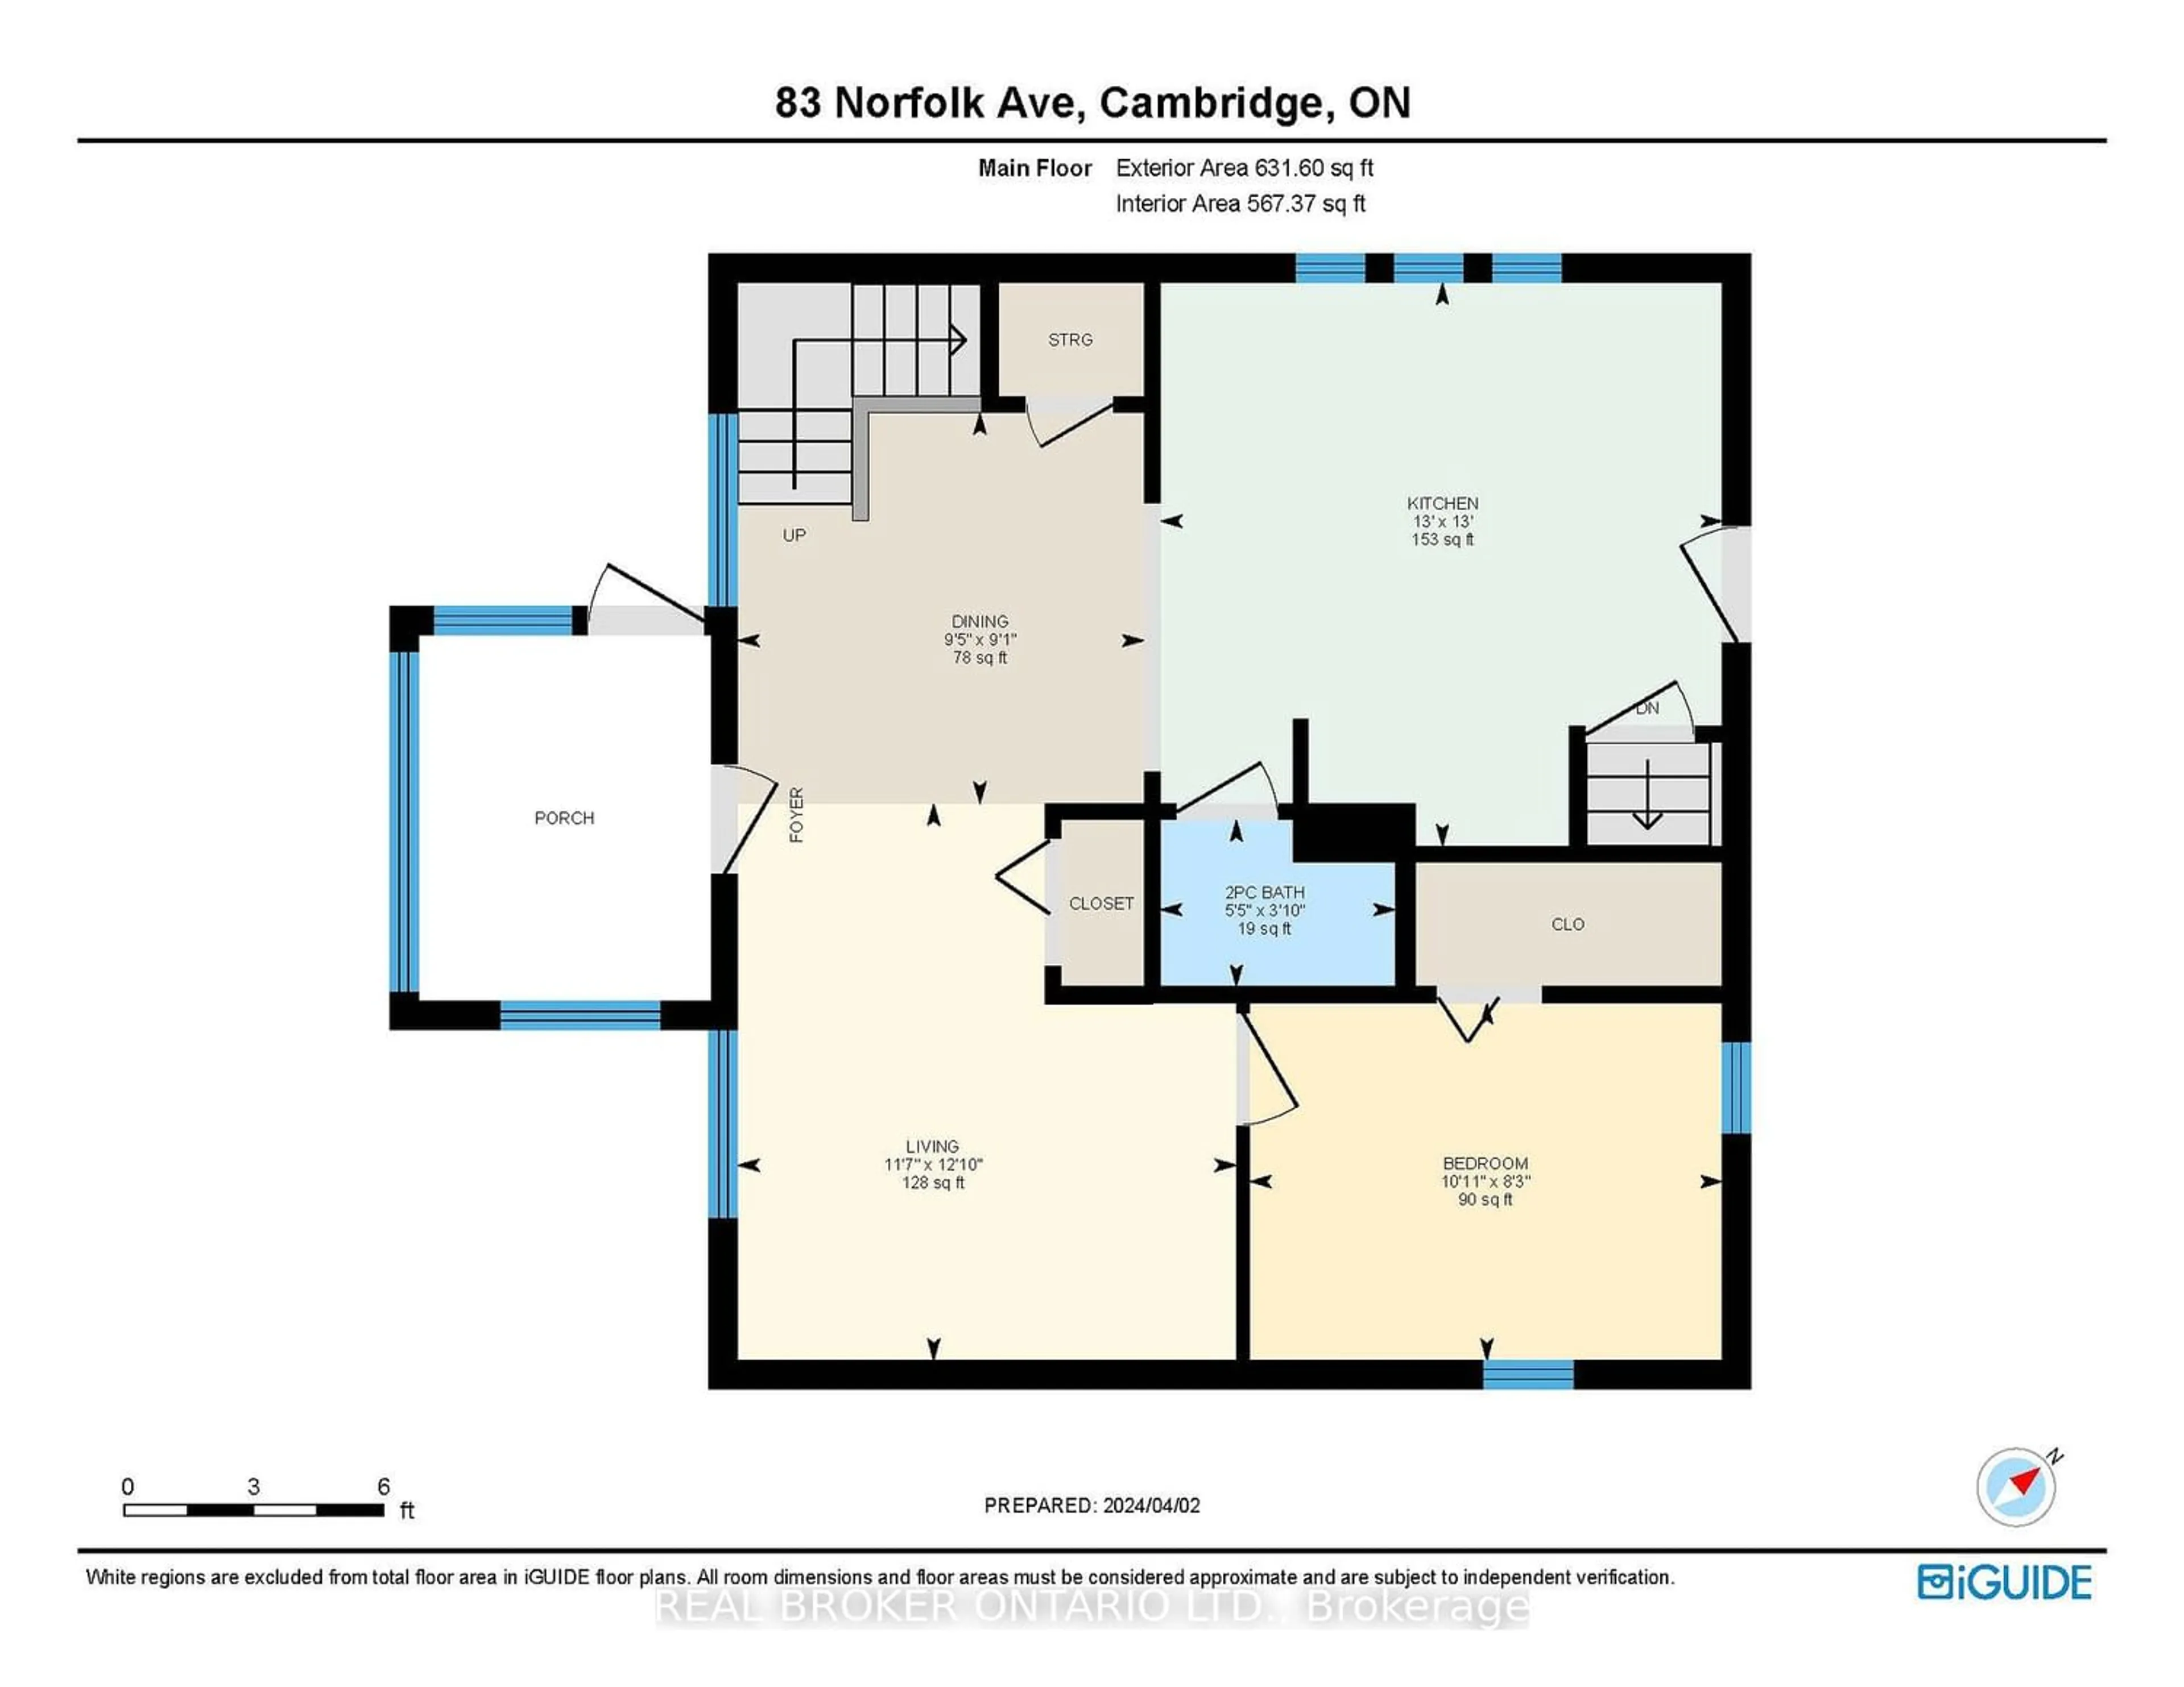 Floor plan for 83 Norfolk Ave, Cambridge Ontario N1R 3T8